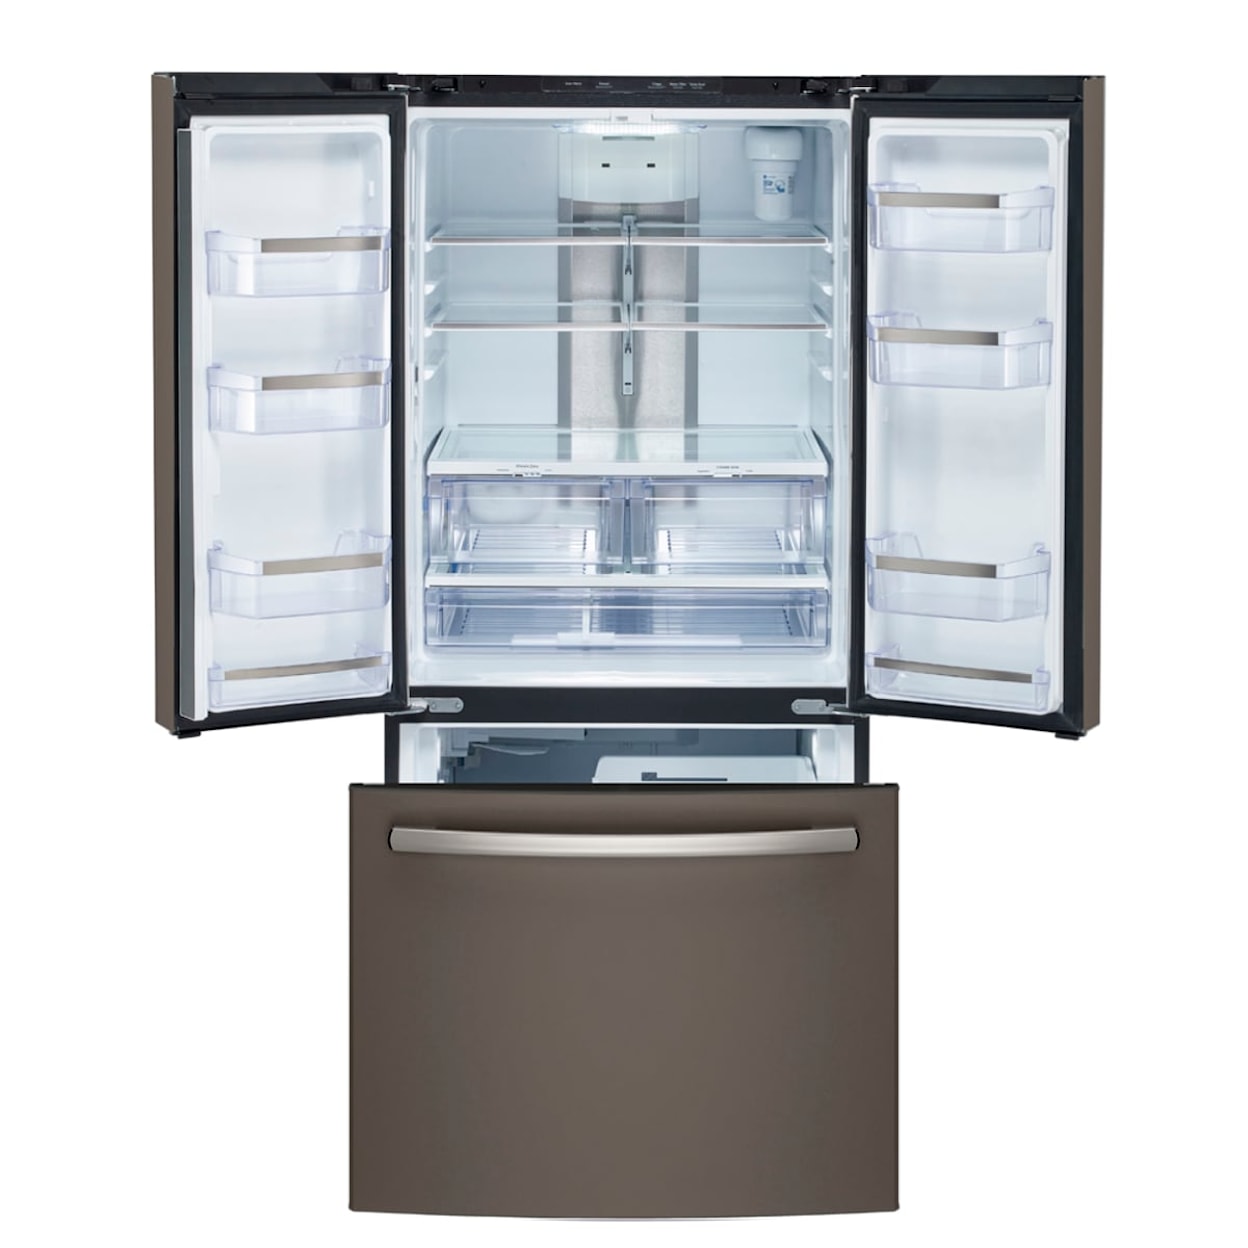 GE Appliances GE Appliances Refrigerator